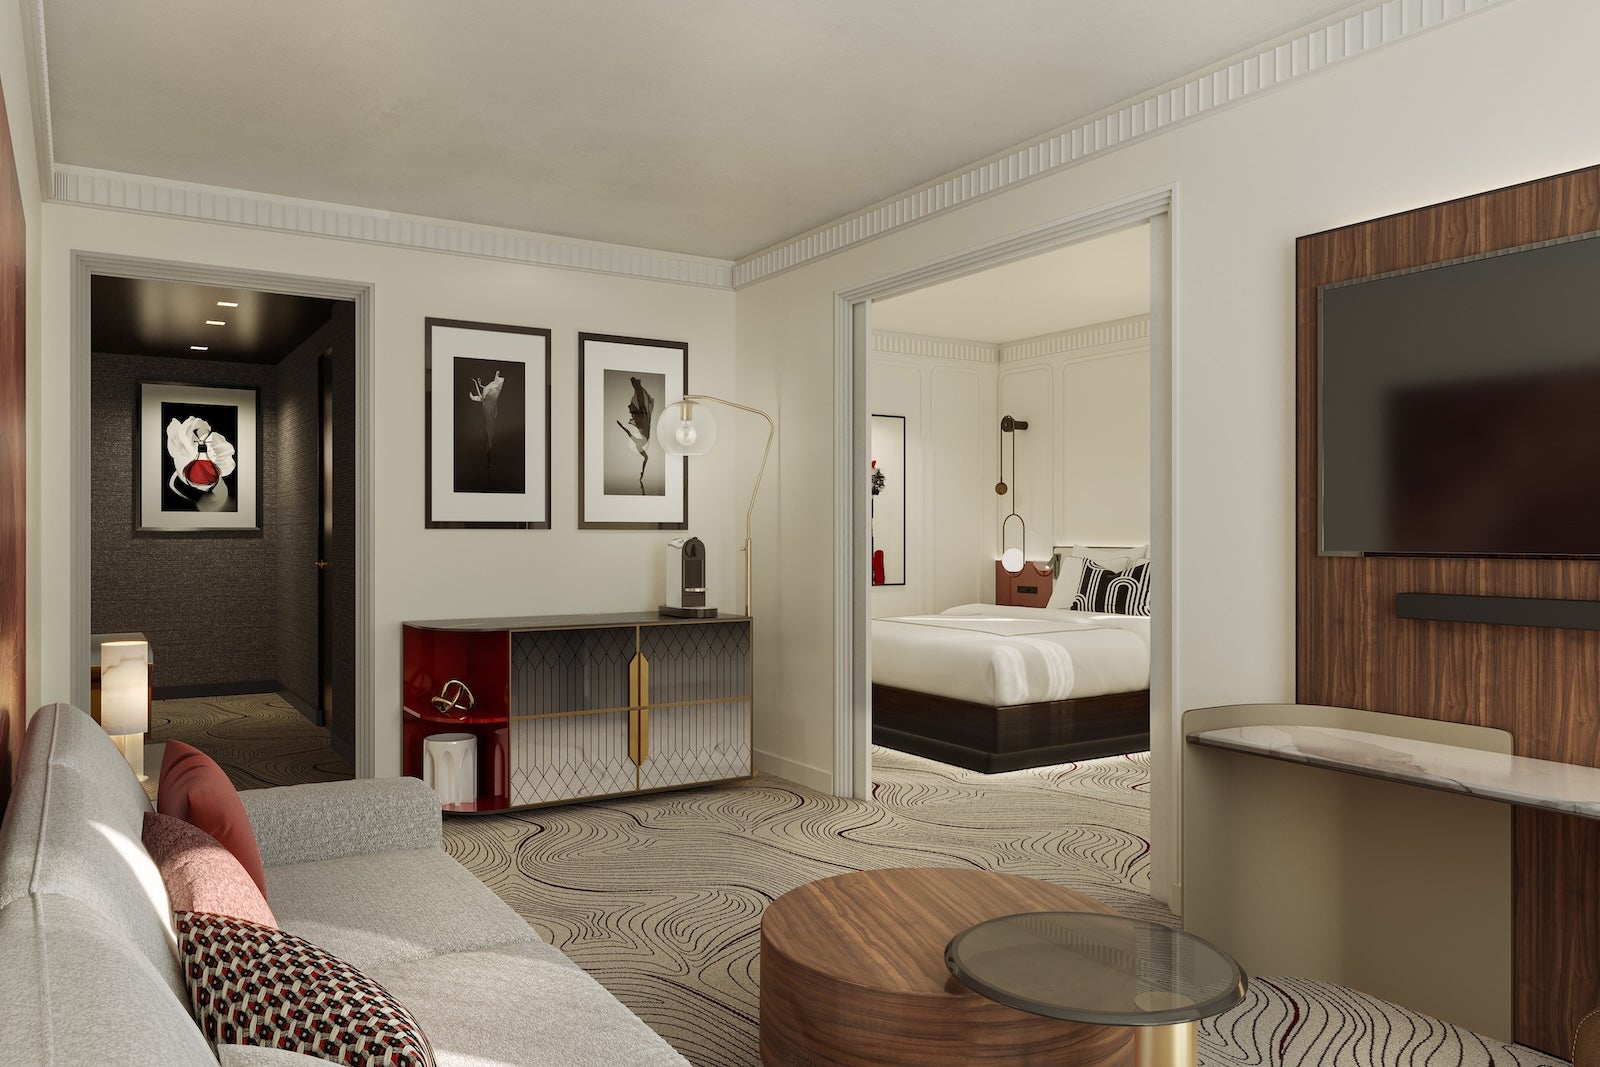 Sofitel plans major renovation to its New York City hotel amid 60th anniversary celebration